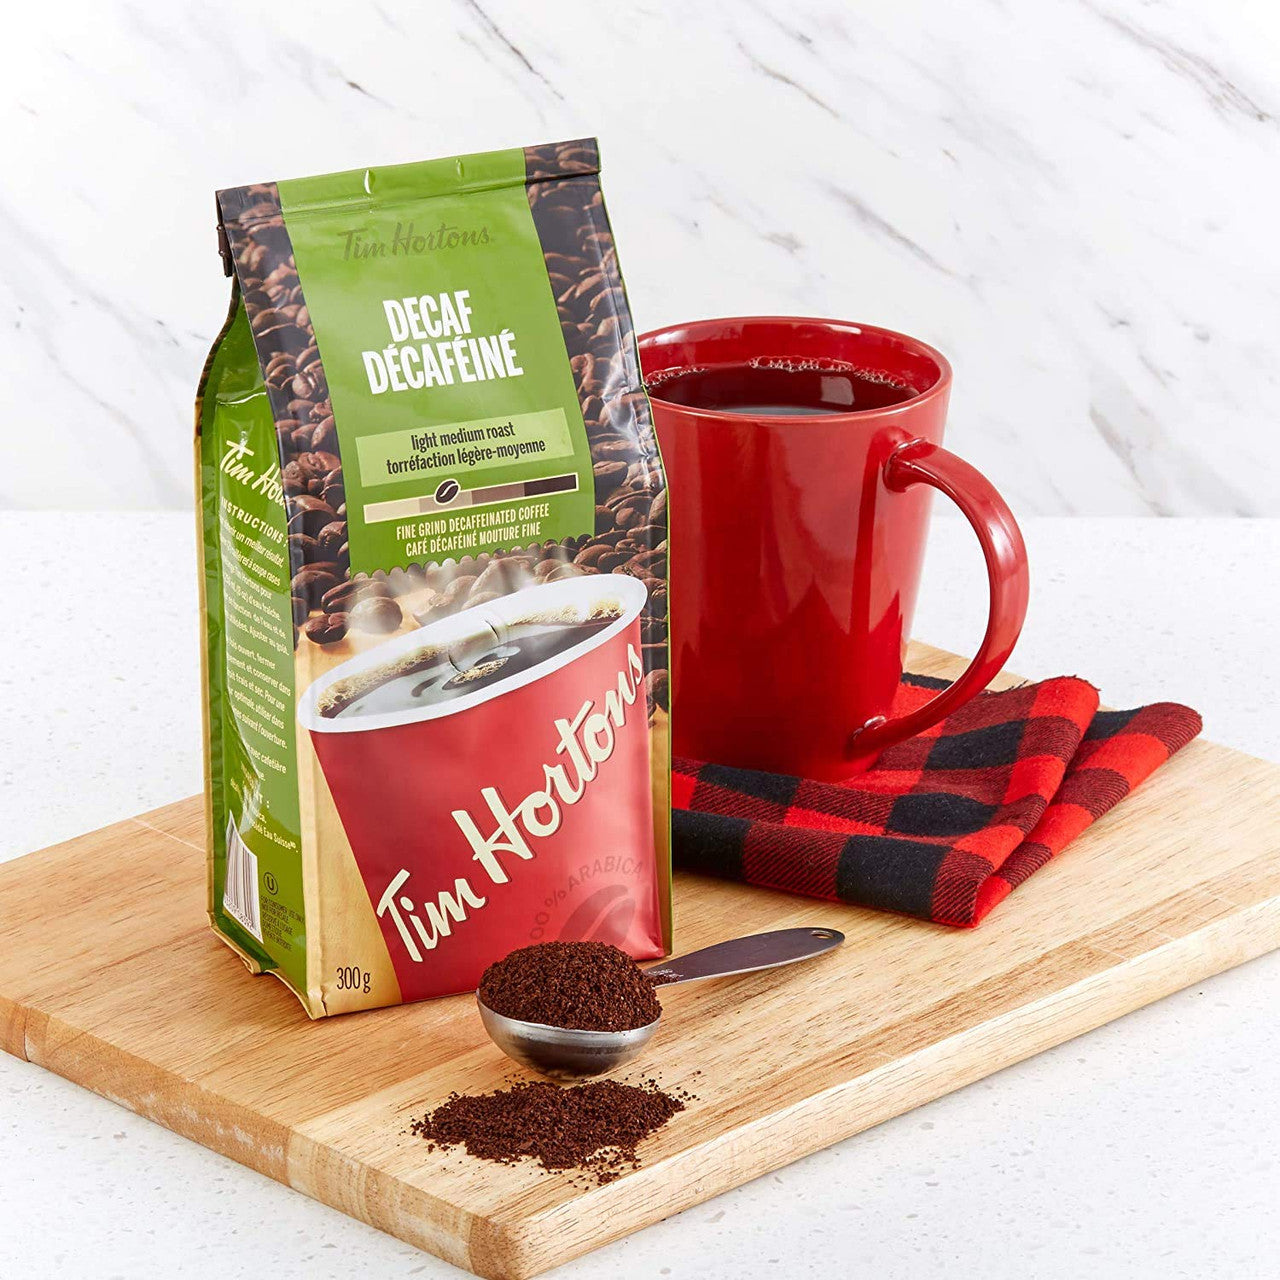 Tim Hortons Decaf Coffee, Fine Grind Bag, Medium Roast, 300g/10.6oz, 2-Pack {Imported from Canada}